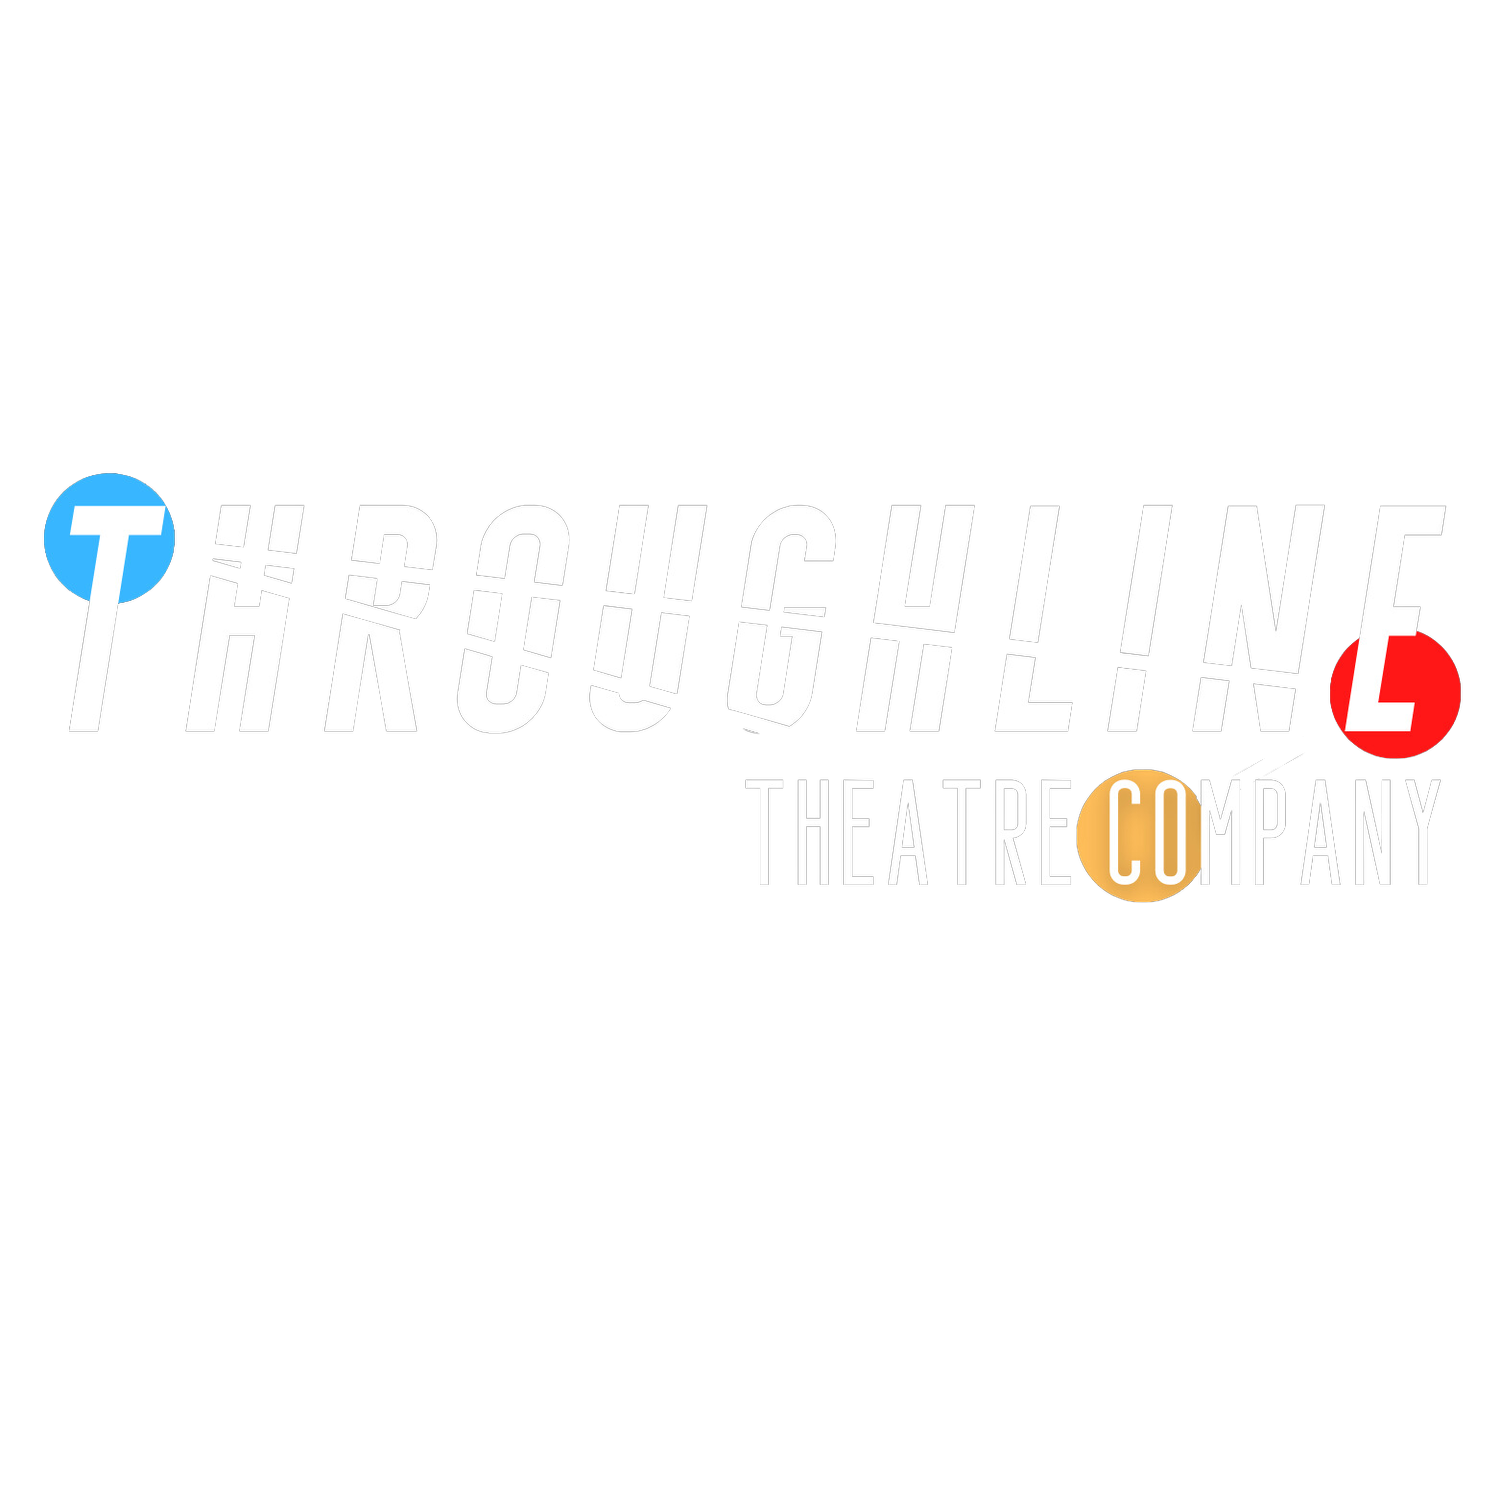 Throughline Theatre Company